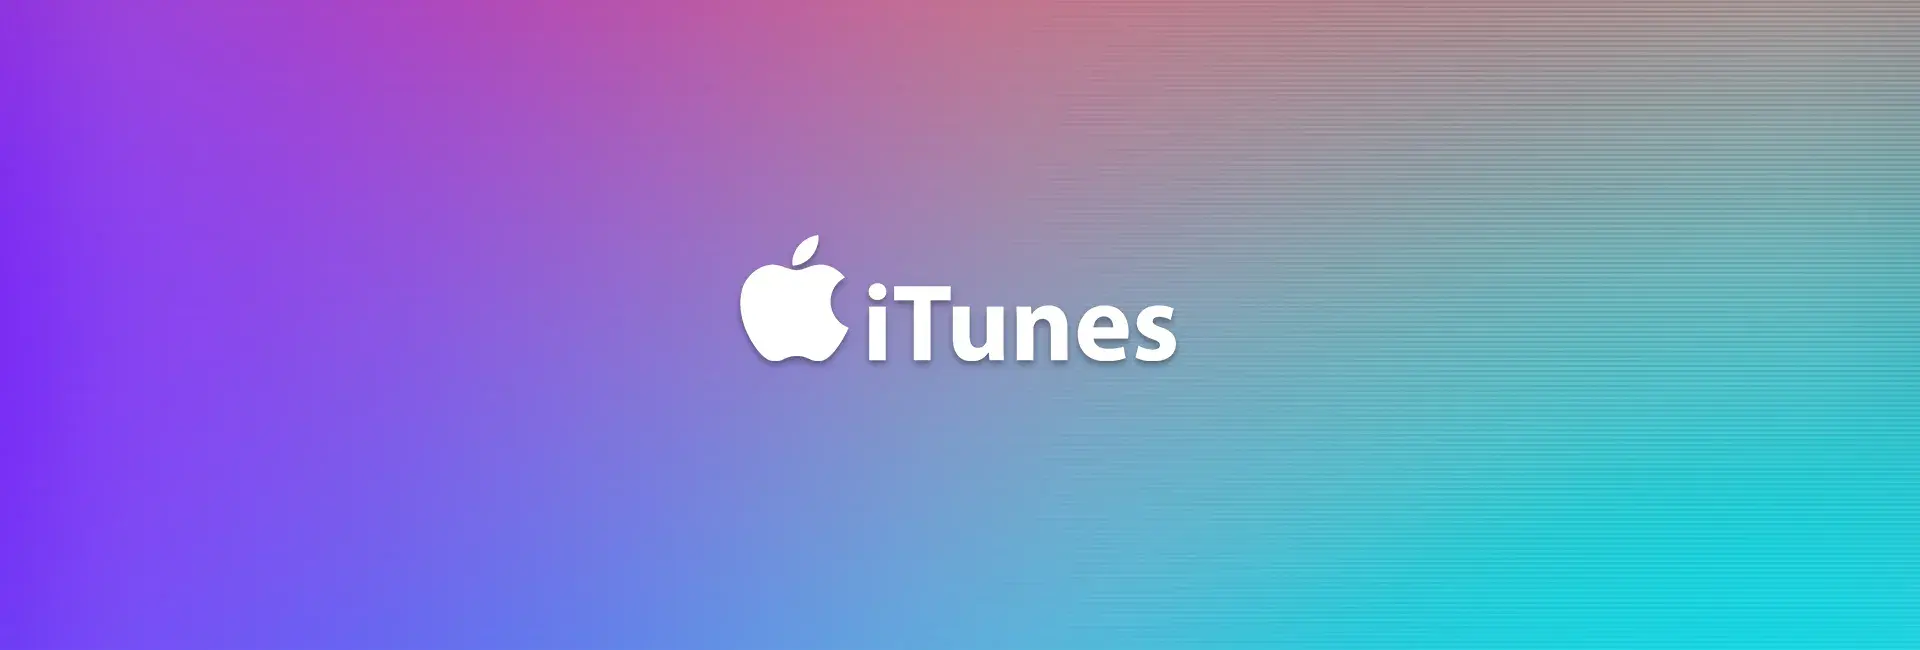 Apple iTunes Gift Card 400 TL iTunes Key TURKEY